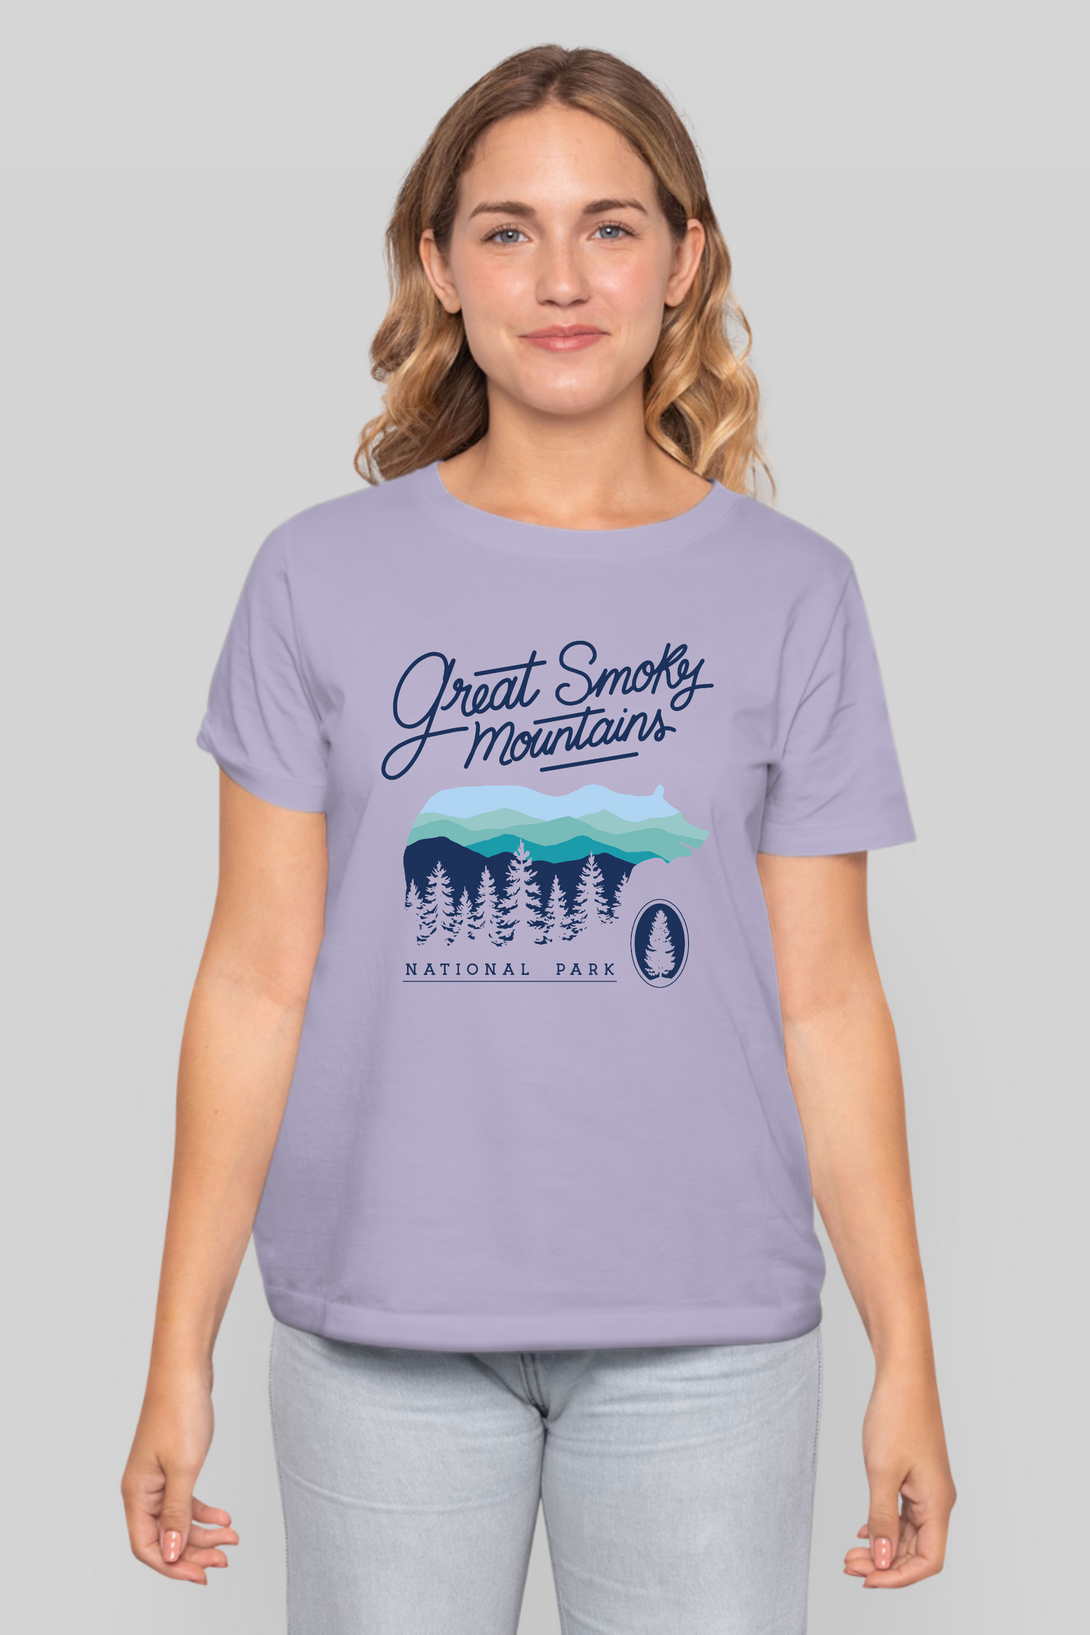 Smoky Summit Printed T-Shirt For Women - WowWaves - 9